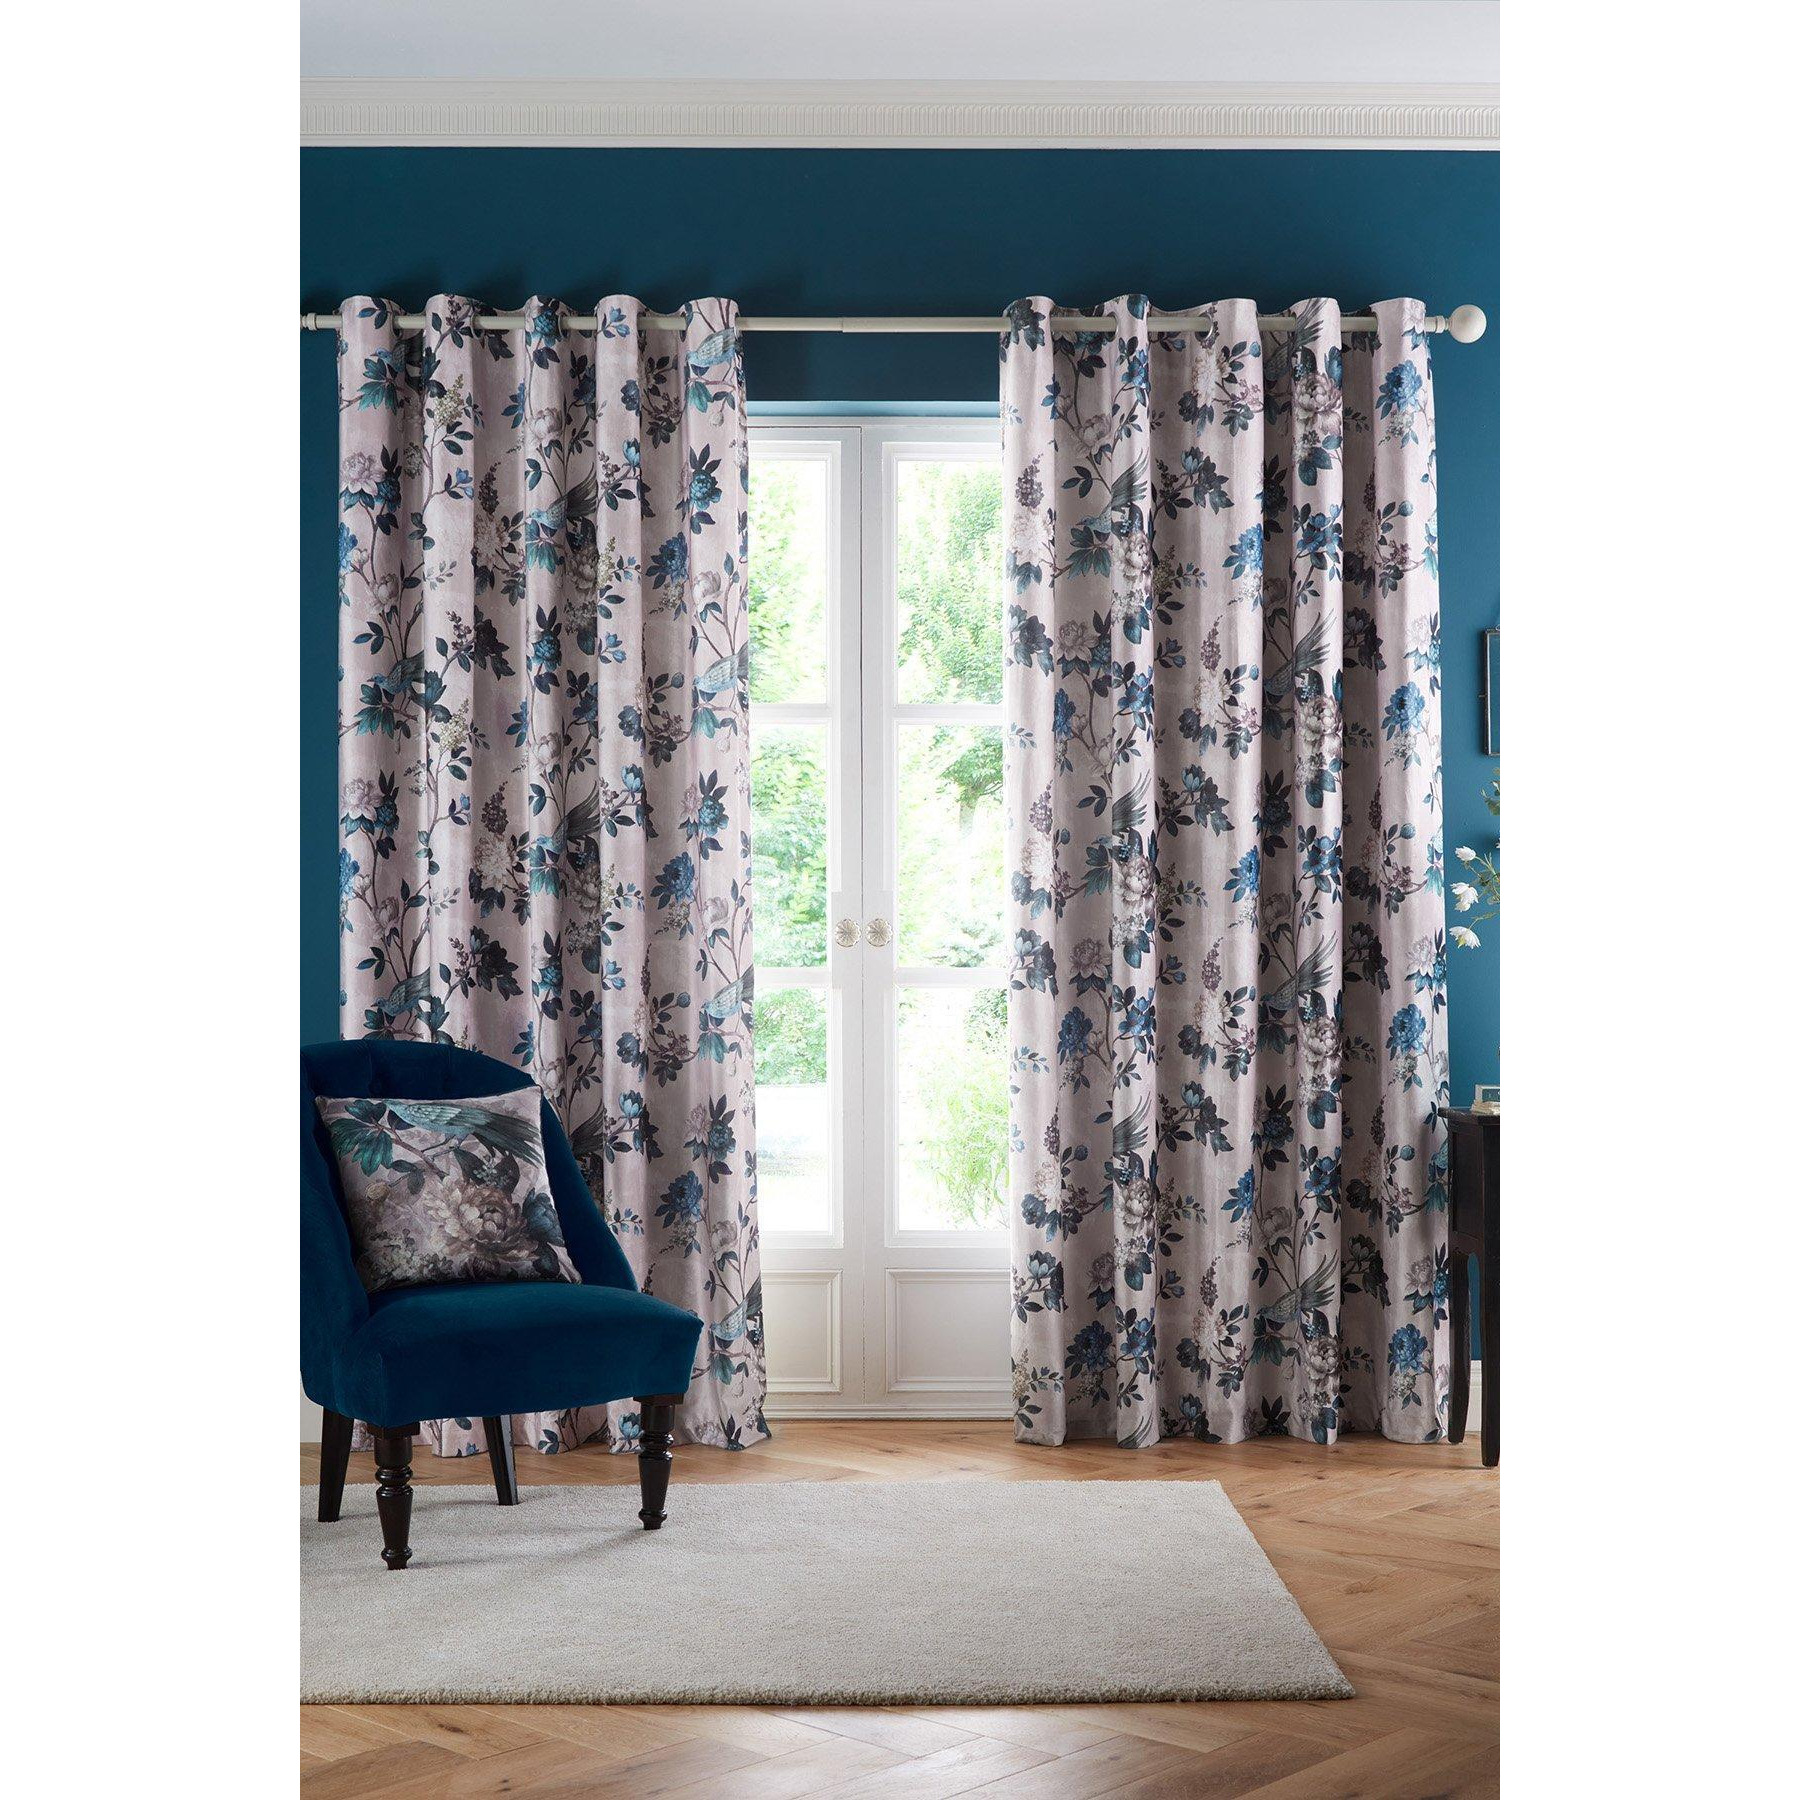 'Windsford' Velvet Pair of Eyelet Curtains - image 1